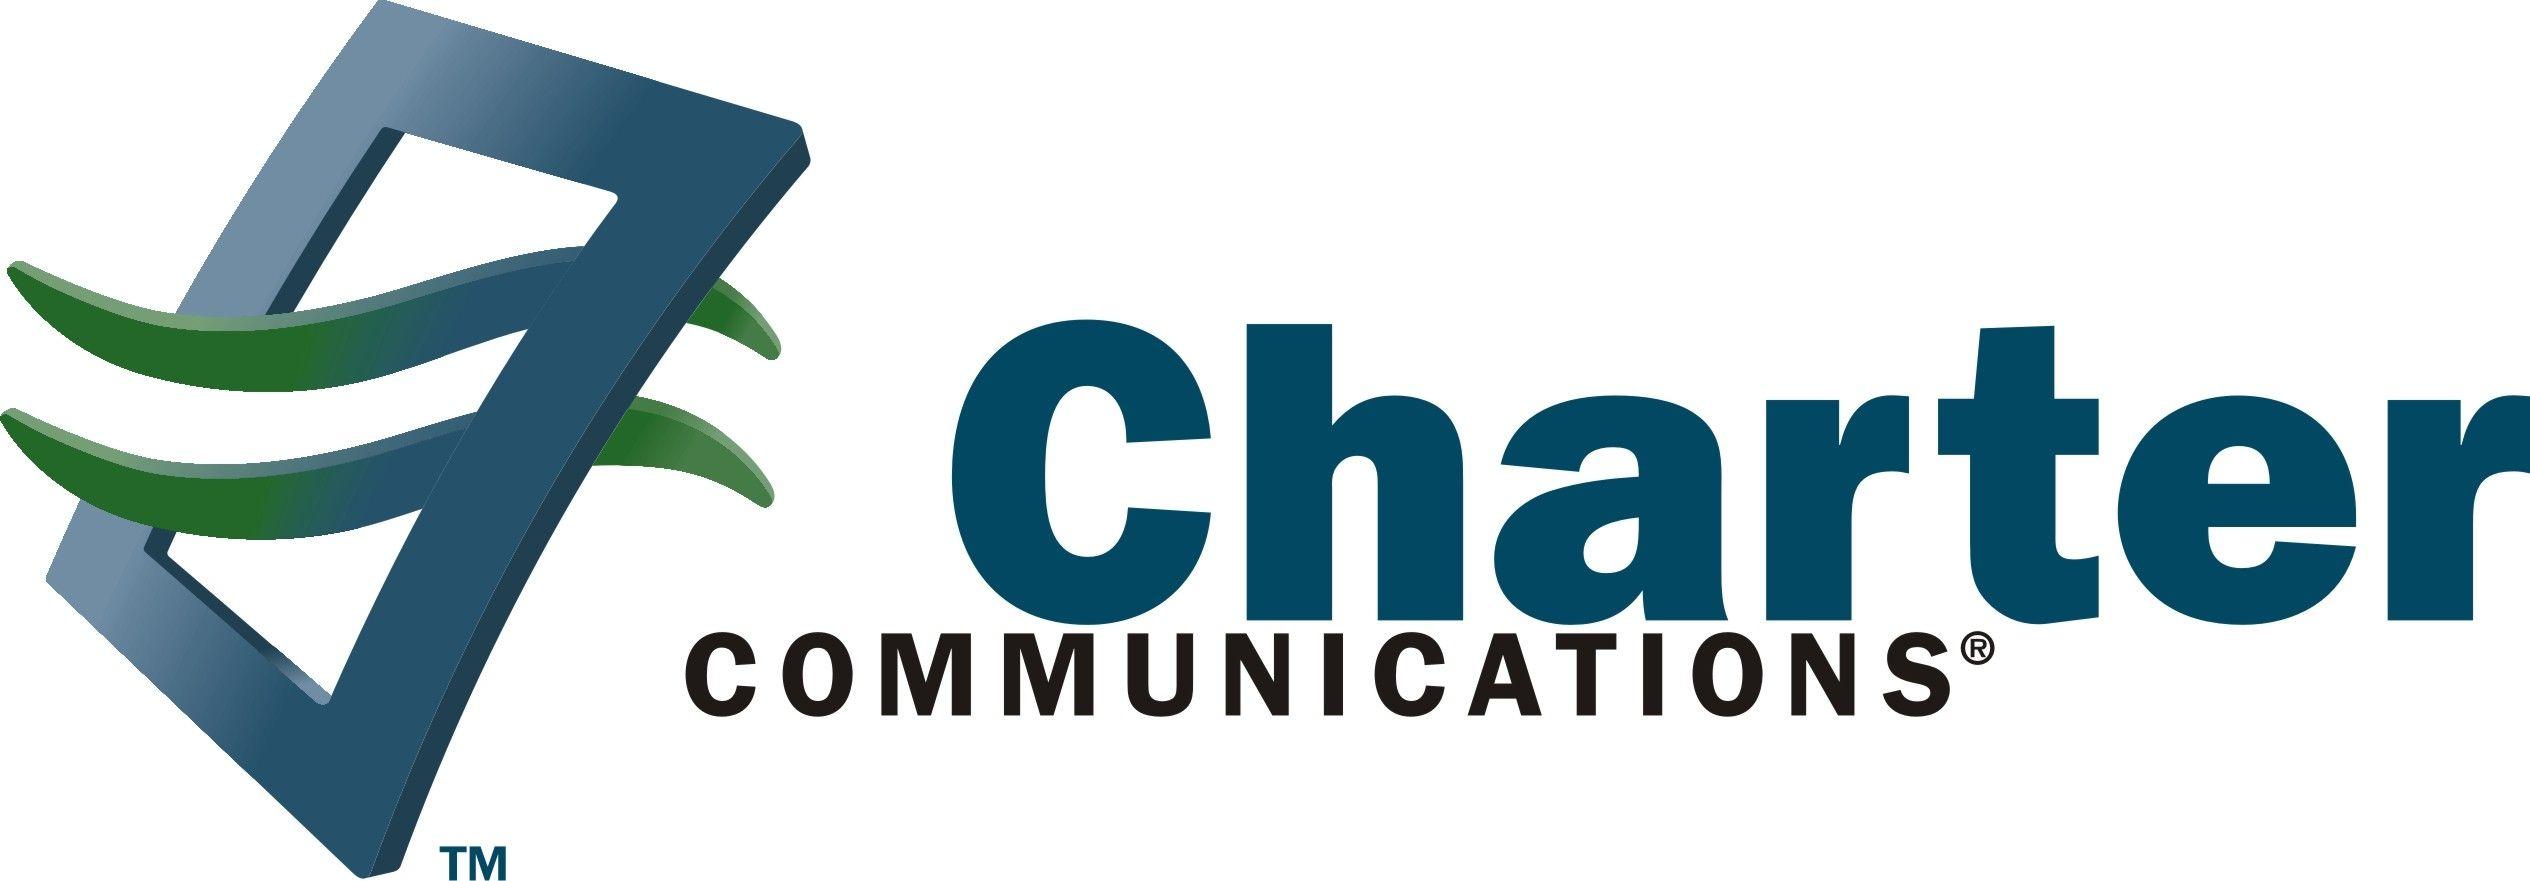 Charter Logo - Charter Communications Logo. AGL (Above Ground Level)